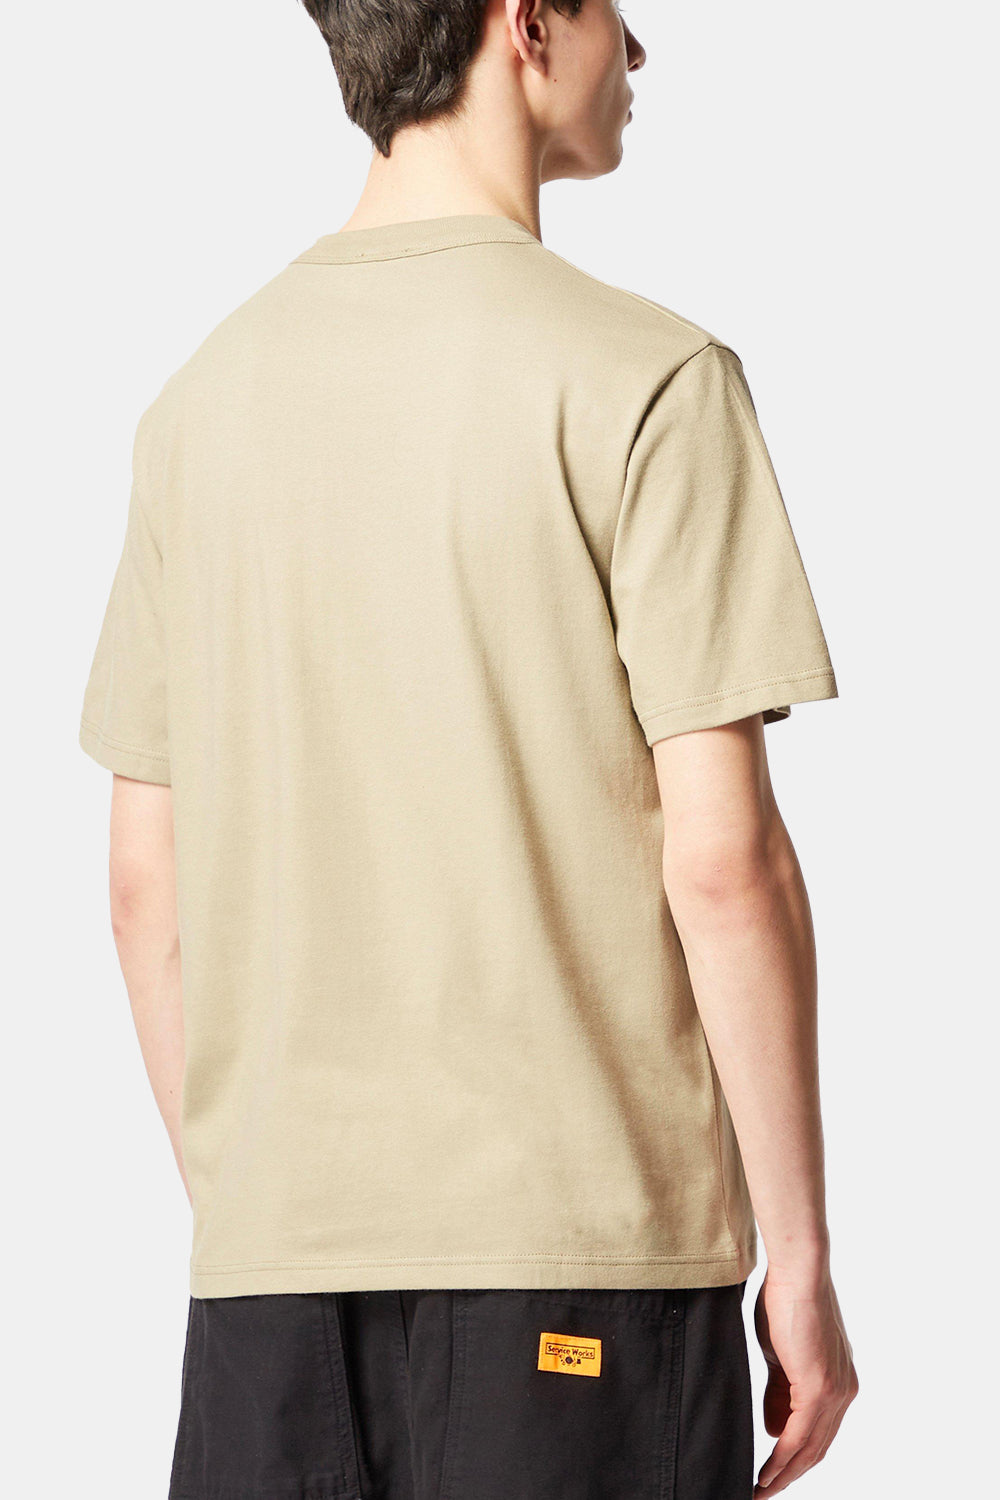 Armor Lux Heritage Organic Callac T-Shirt (Genet Yellow)